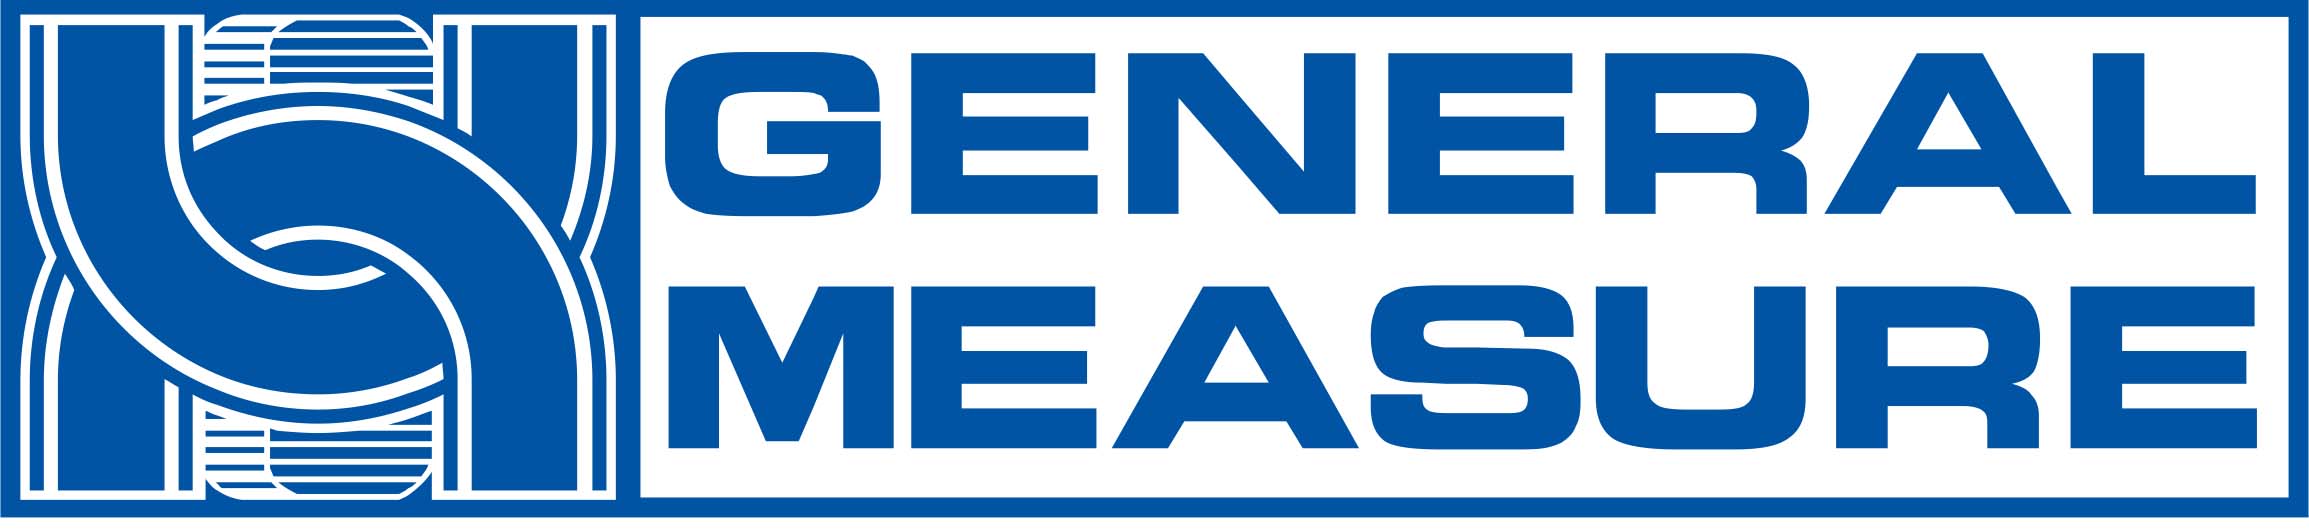 General Measure Technology Co. Ltd.